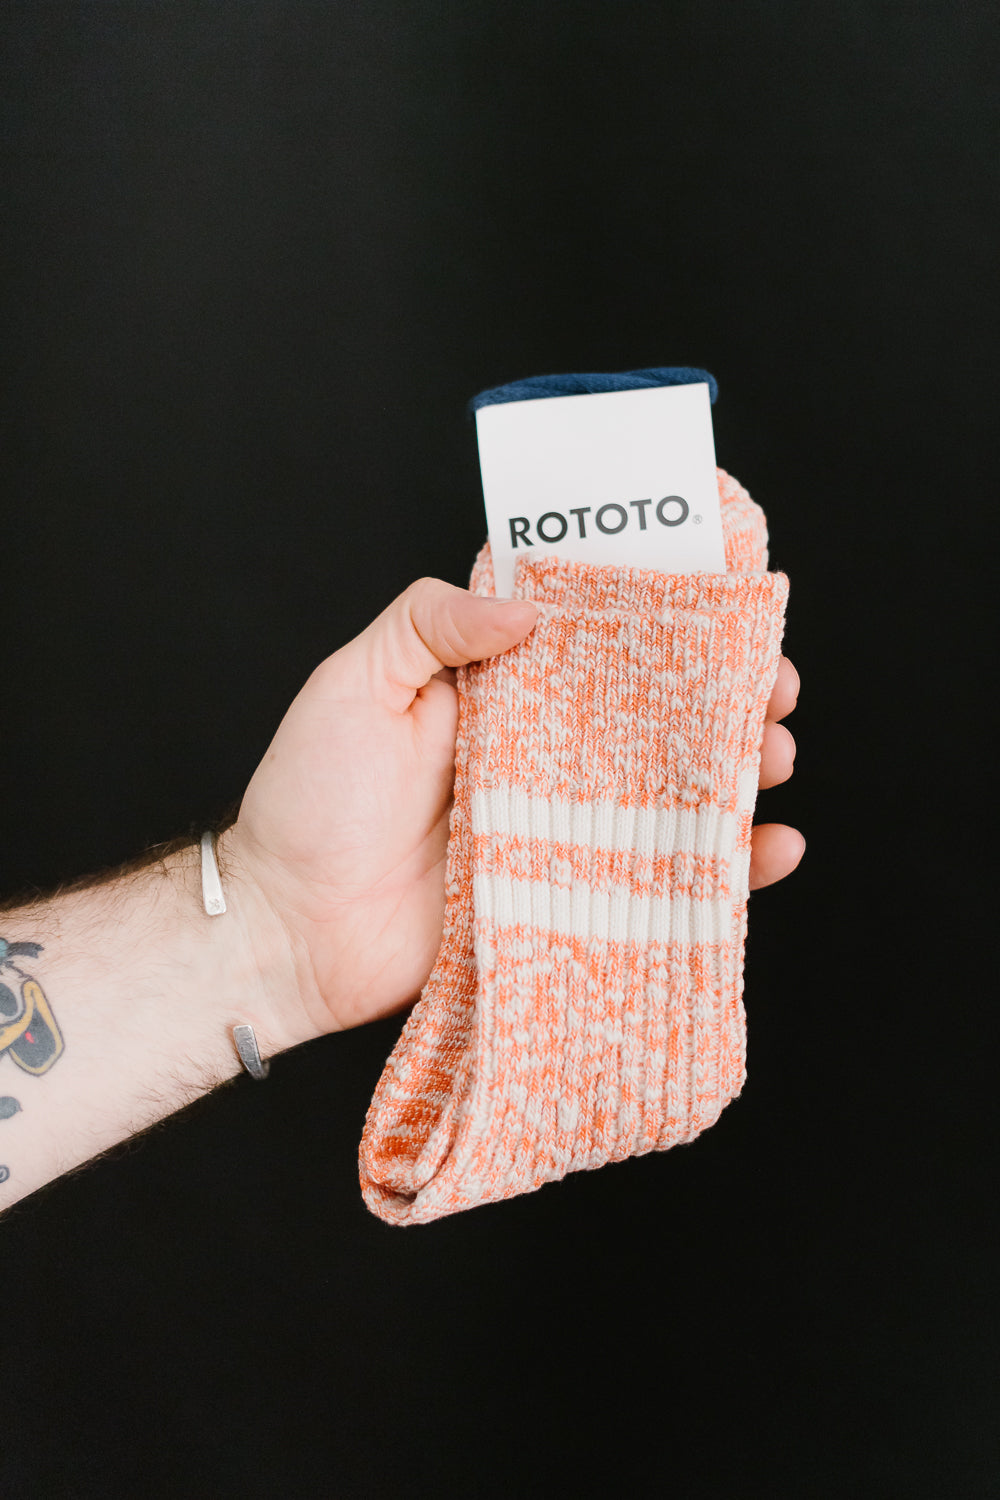 R1485 - OG Cotton Slub Stripe Socks - Orange